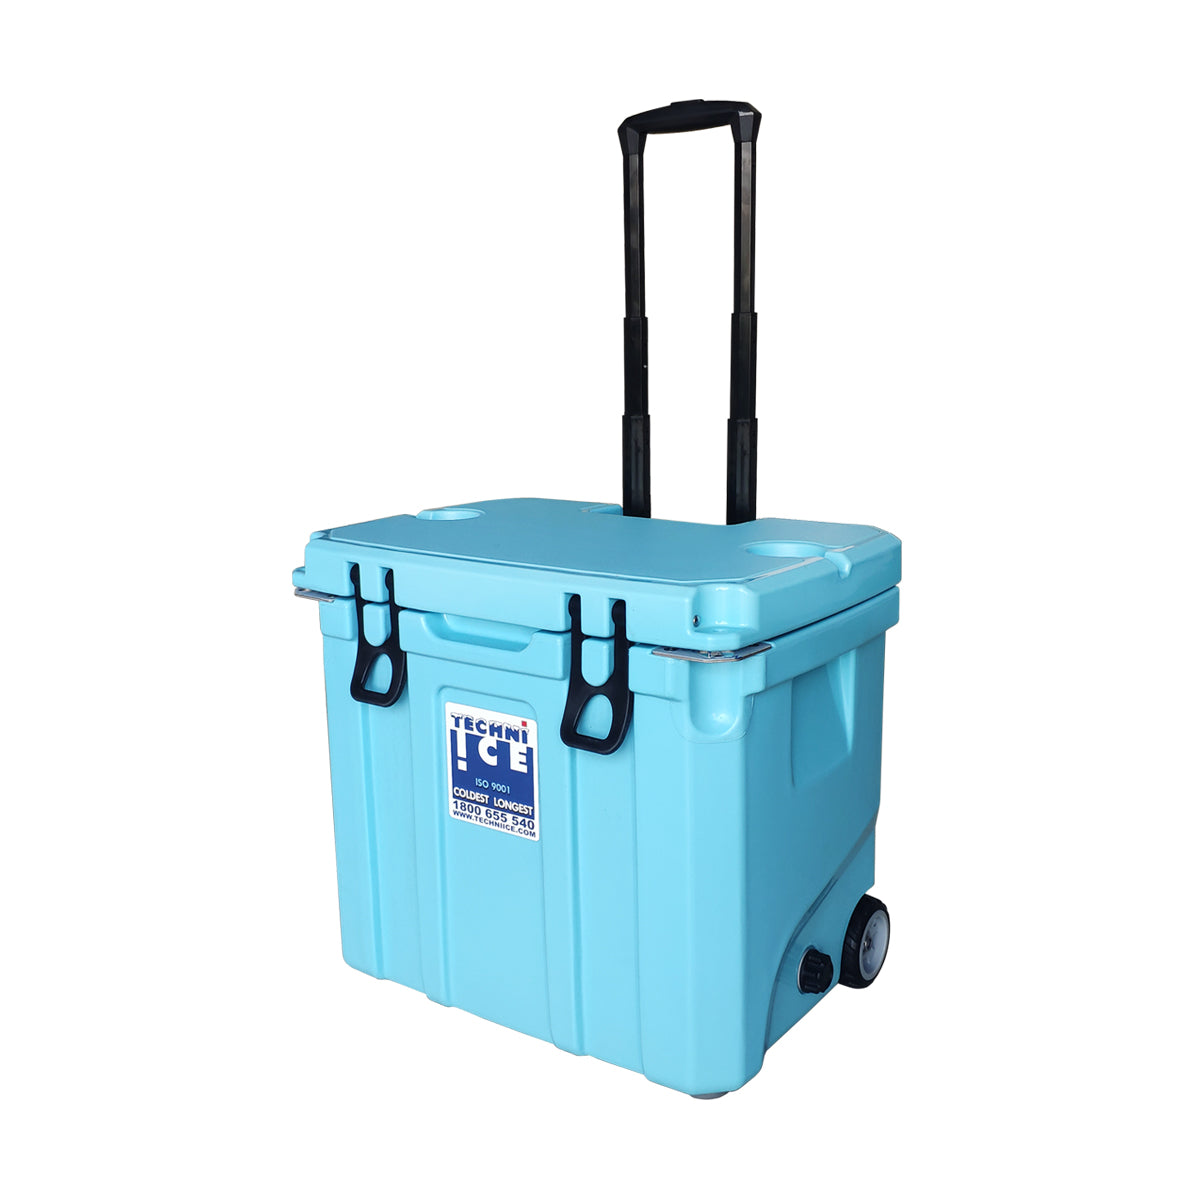 Techni Ice Signature Hybrid Premium Ice Box 35L Light Blue Wheels with Wheels & Telescopic Travel Handle *FRESH STOCK JUST ARRIVED *FREE 6 REUSABLE DRY ICE PACKS VALUES $32.95